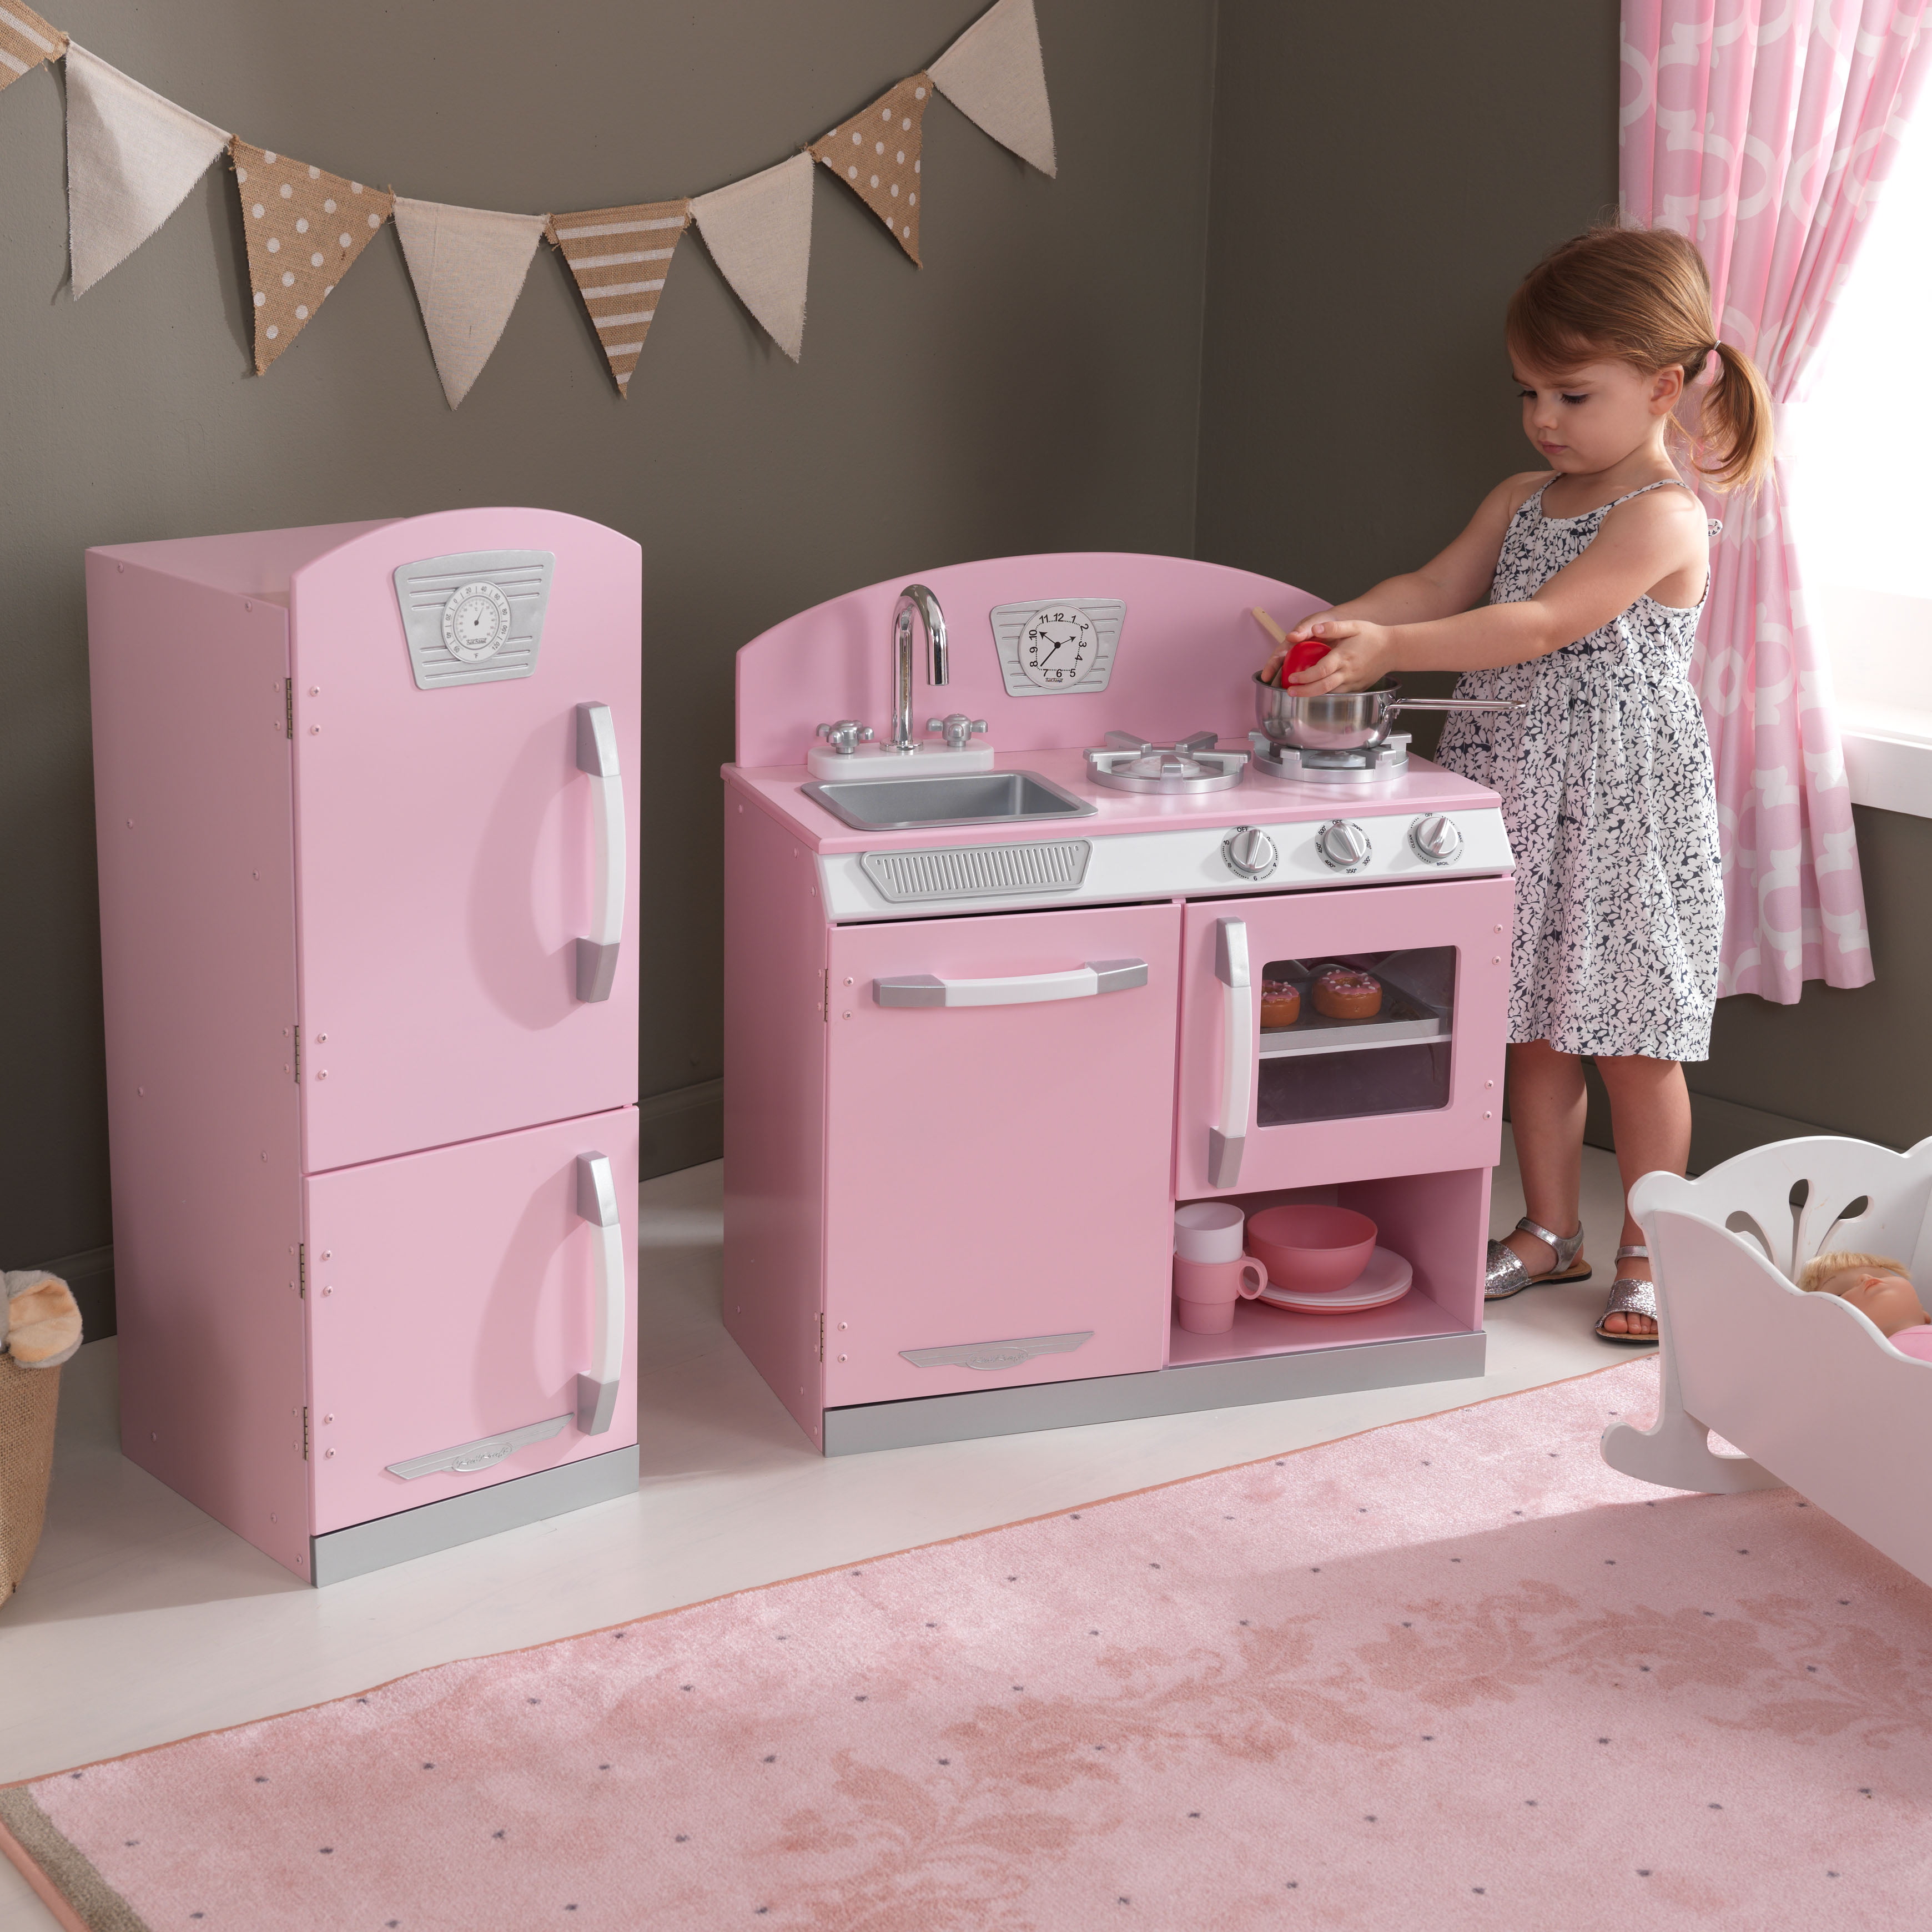 KidKraft 53160 Pink Retro 2 Piece Kitchen Refrigerator Playset Kids Play Set 706943531600 | eBay